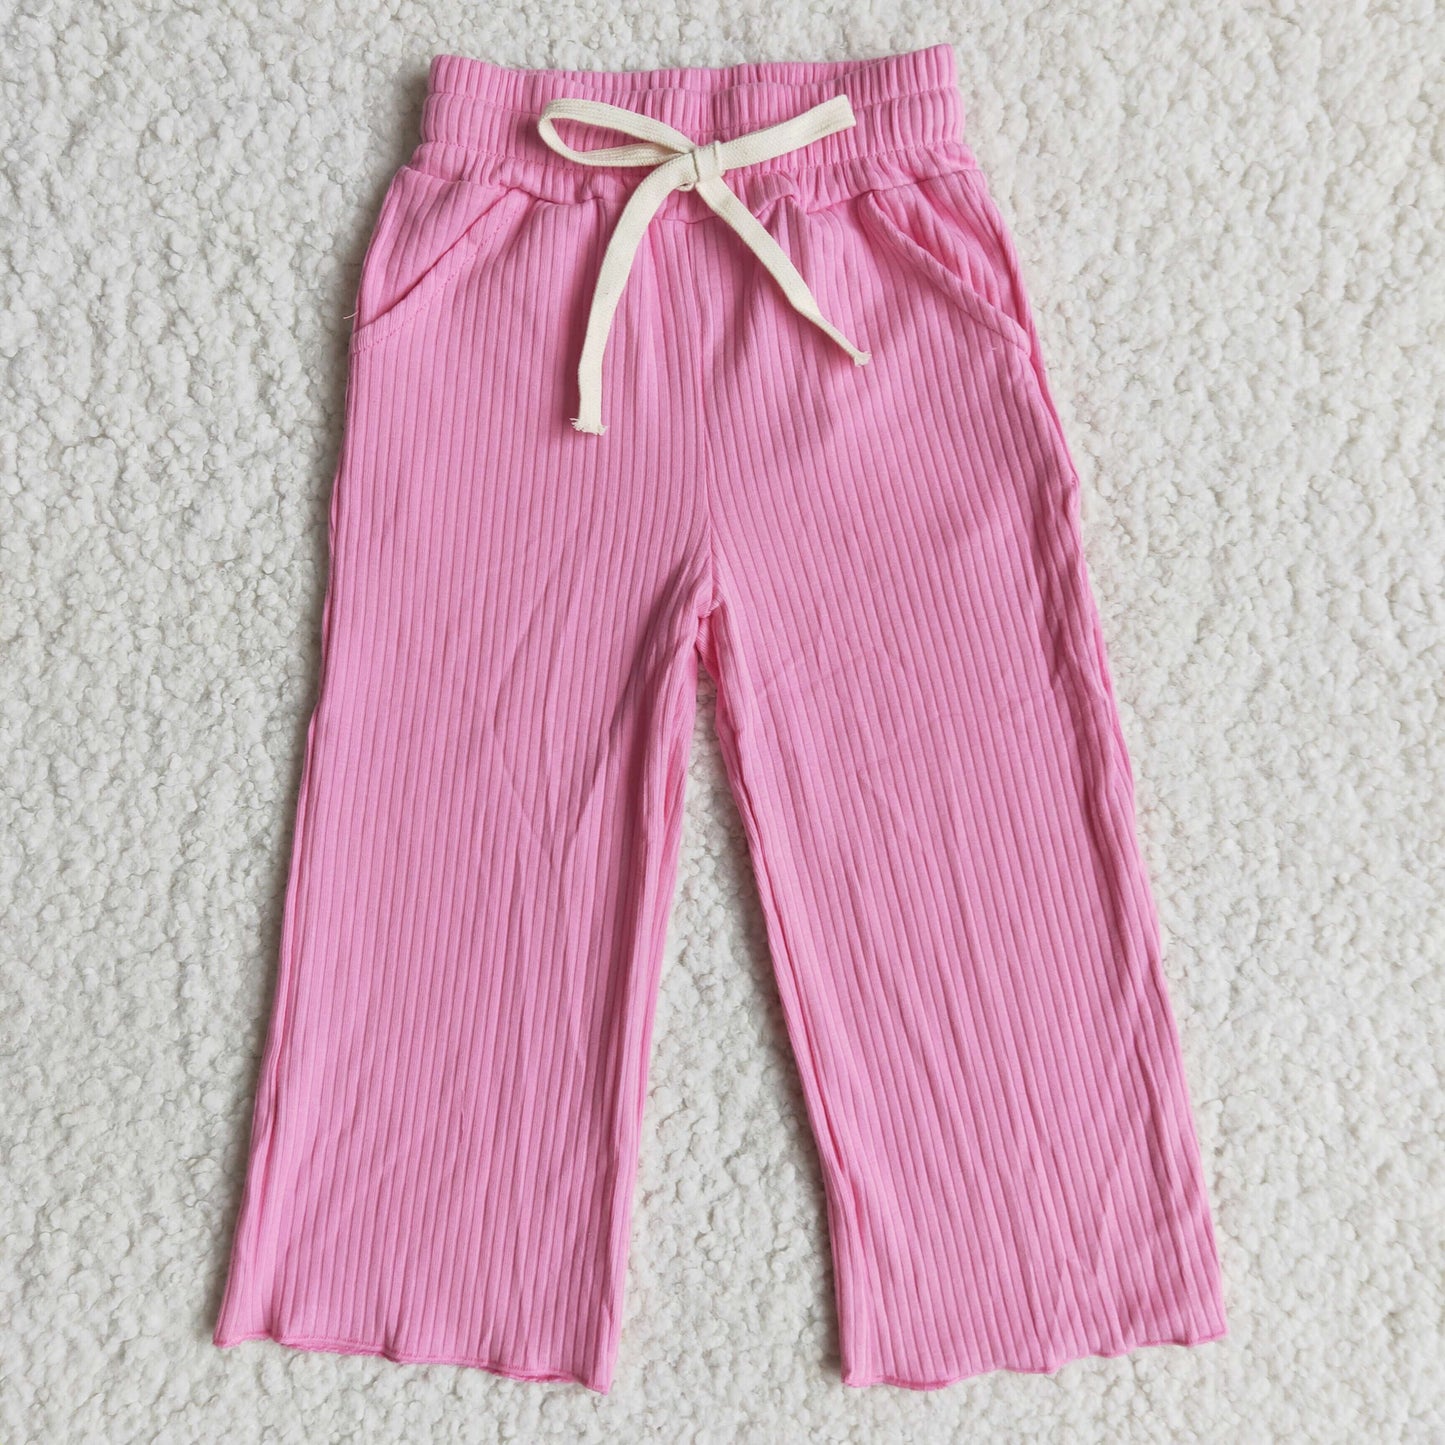 Hot pink stripe cotton elastic waistband pants